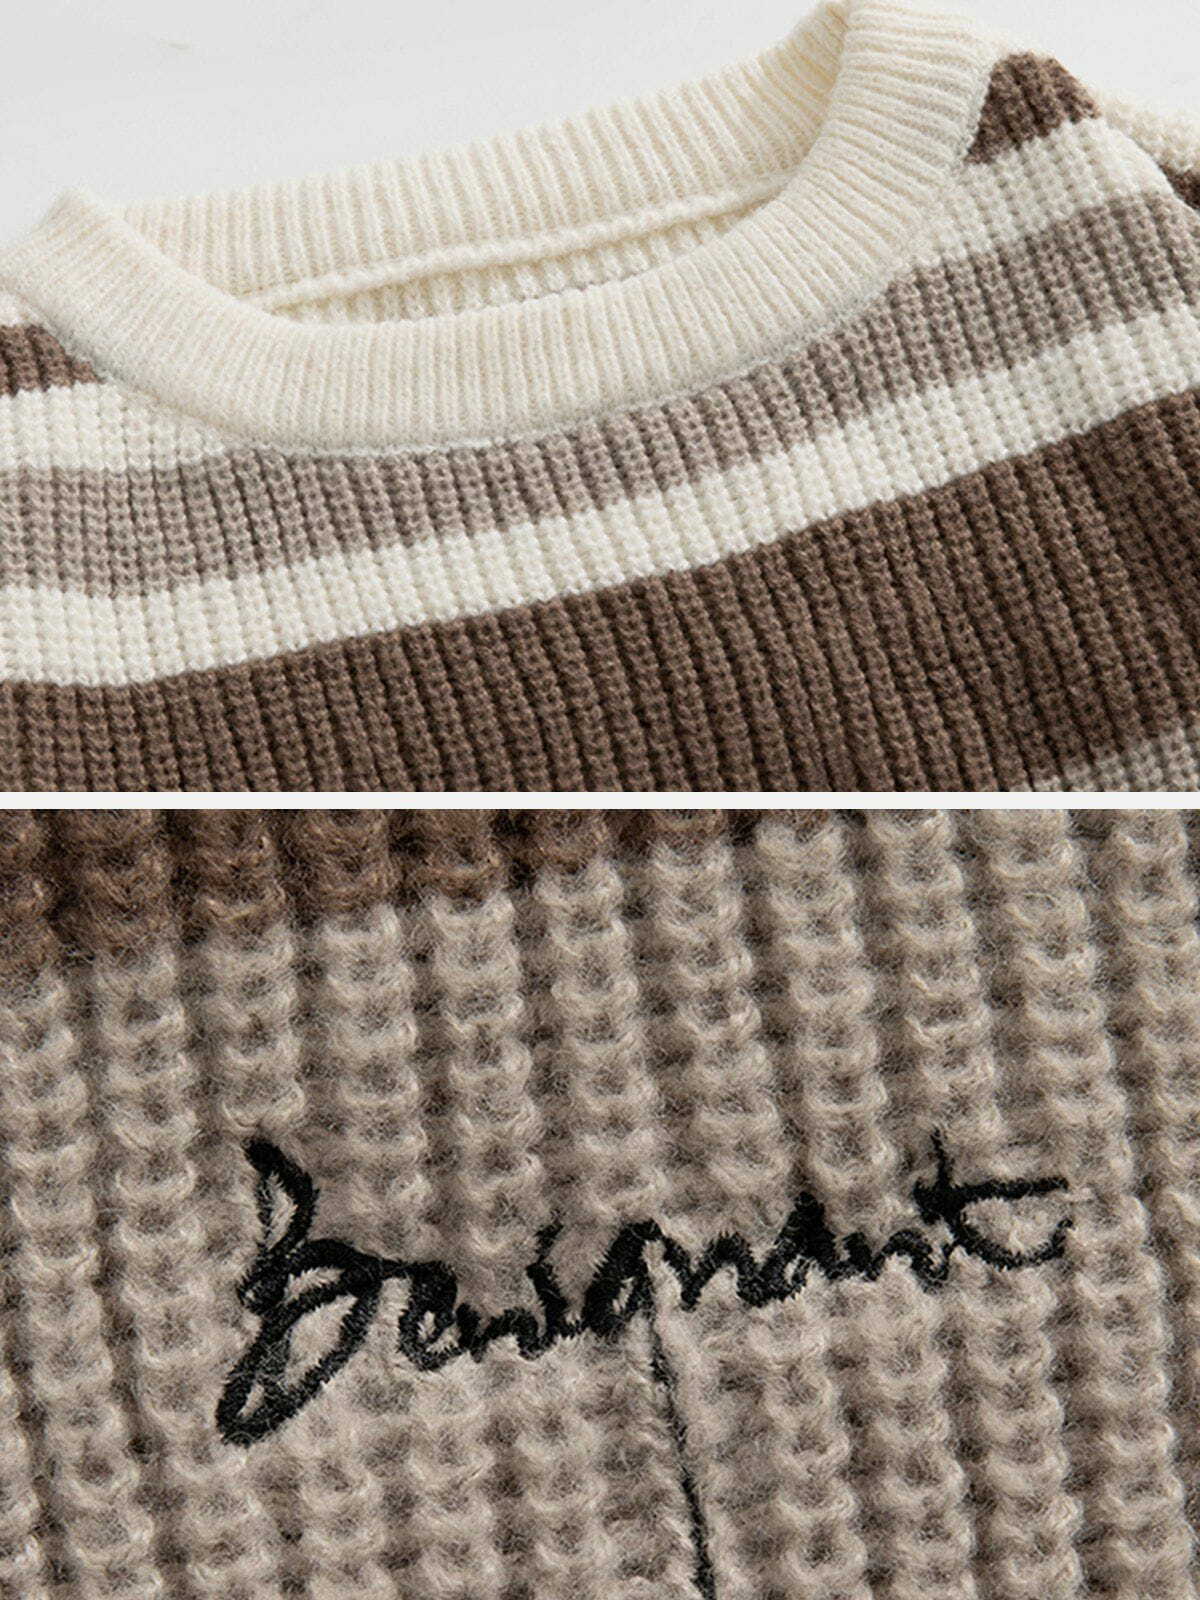 color block striped sweater edgy retro y2k fashion 2843